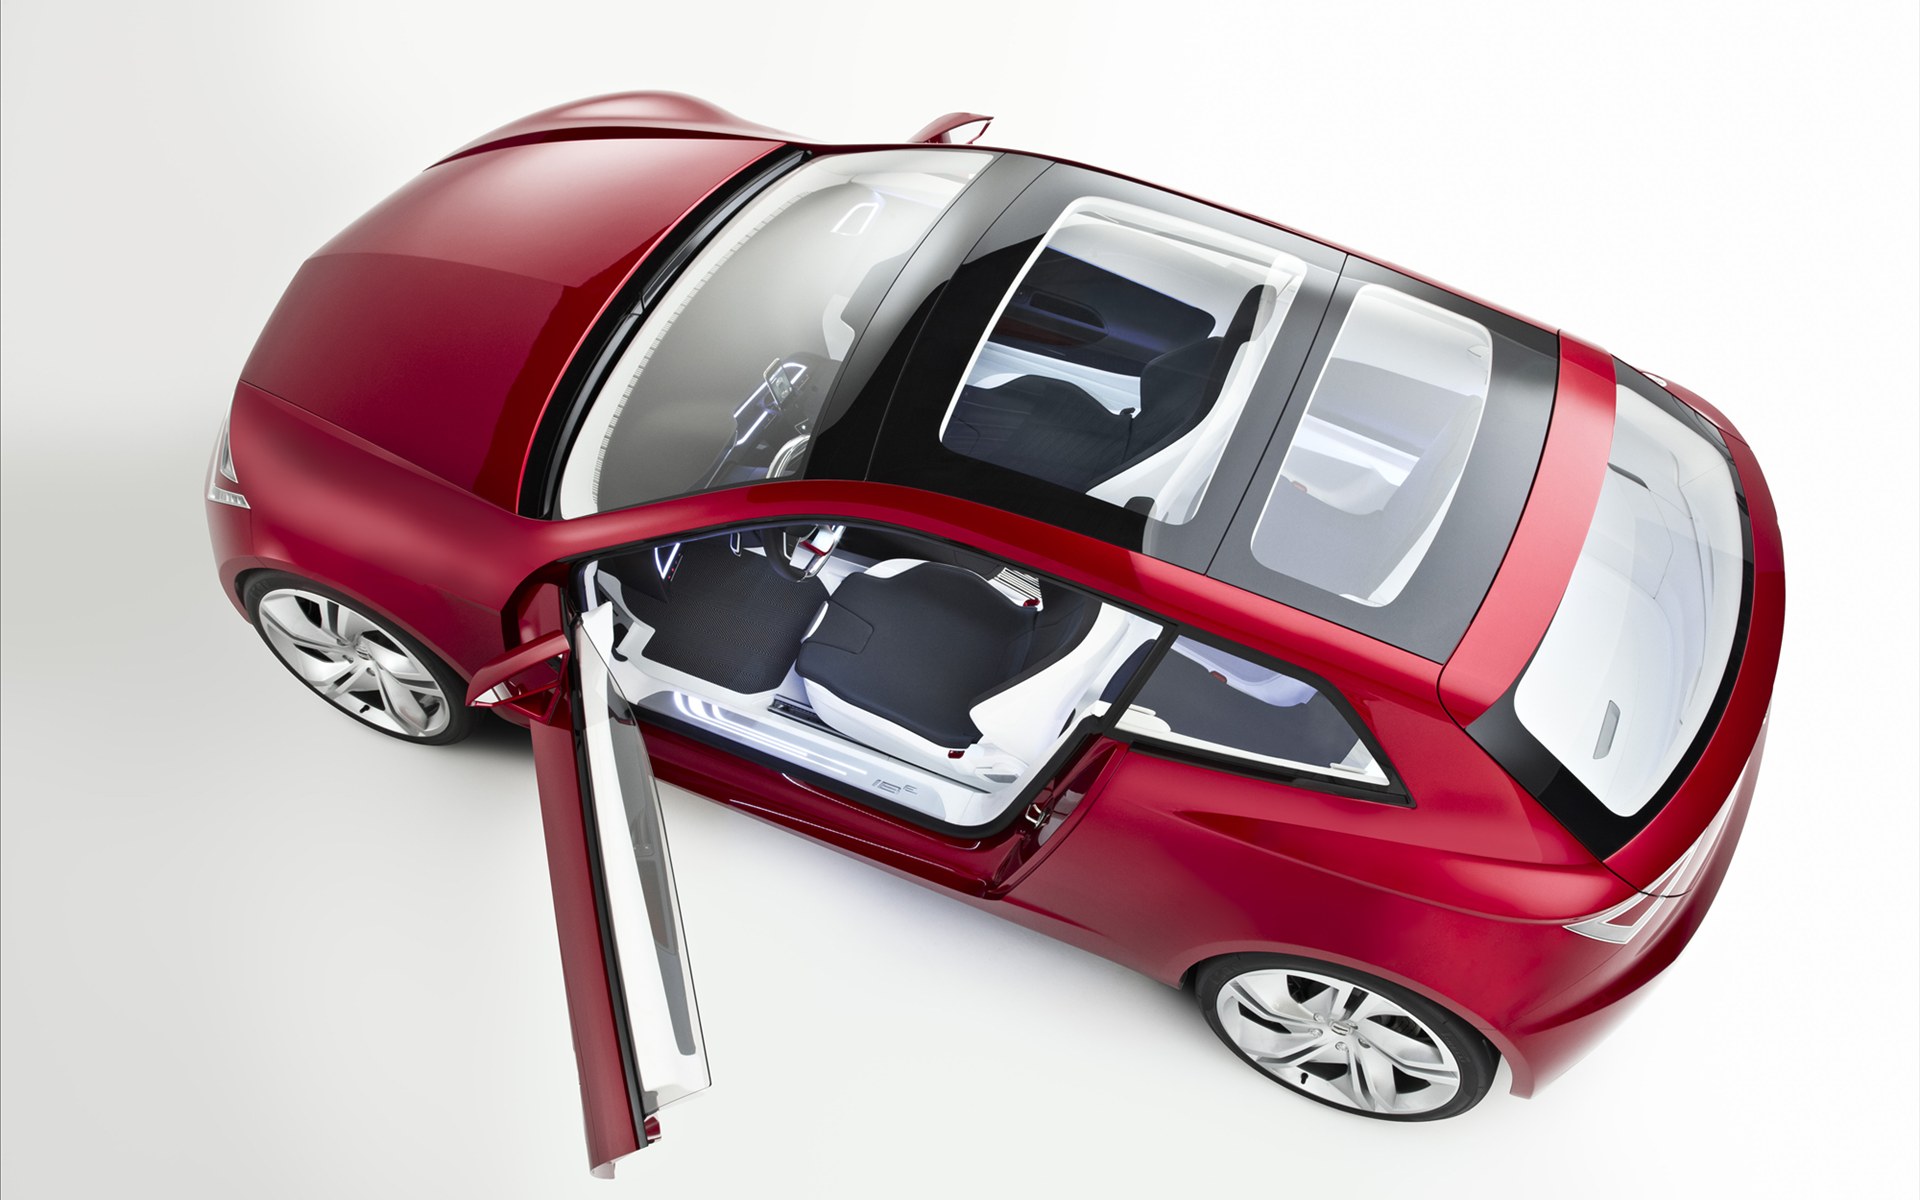 SEAT electric concept car